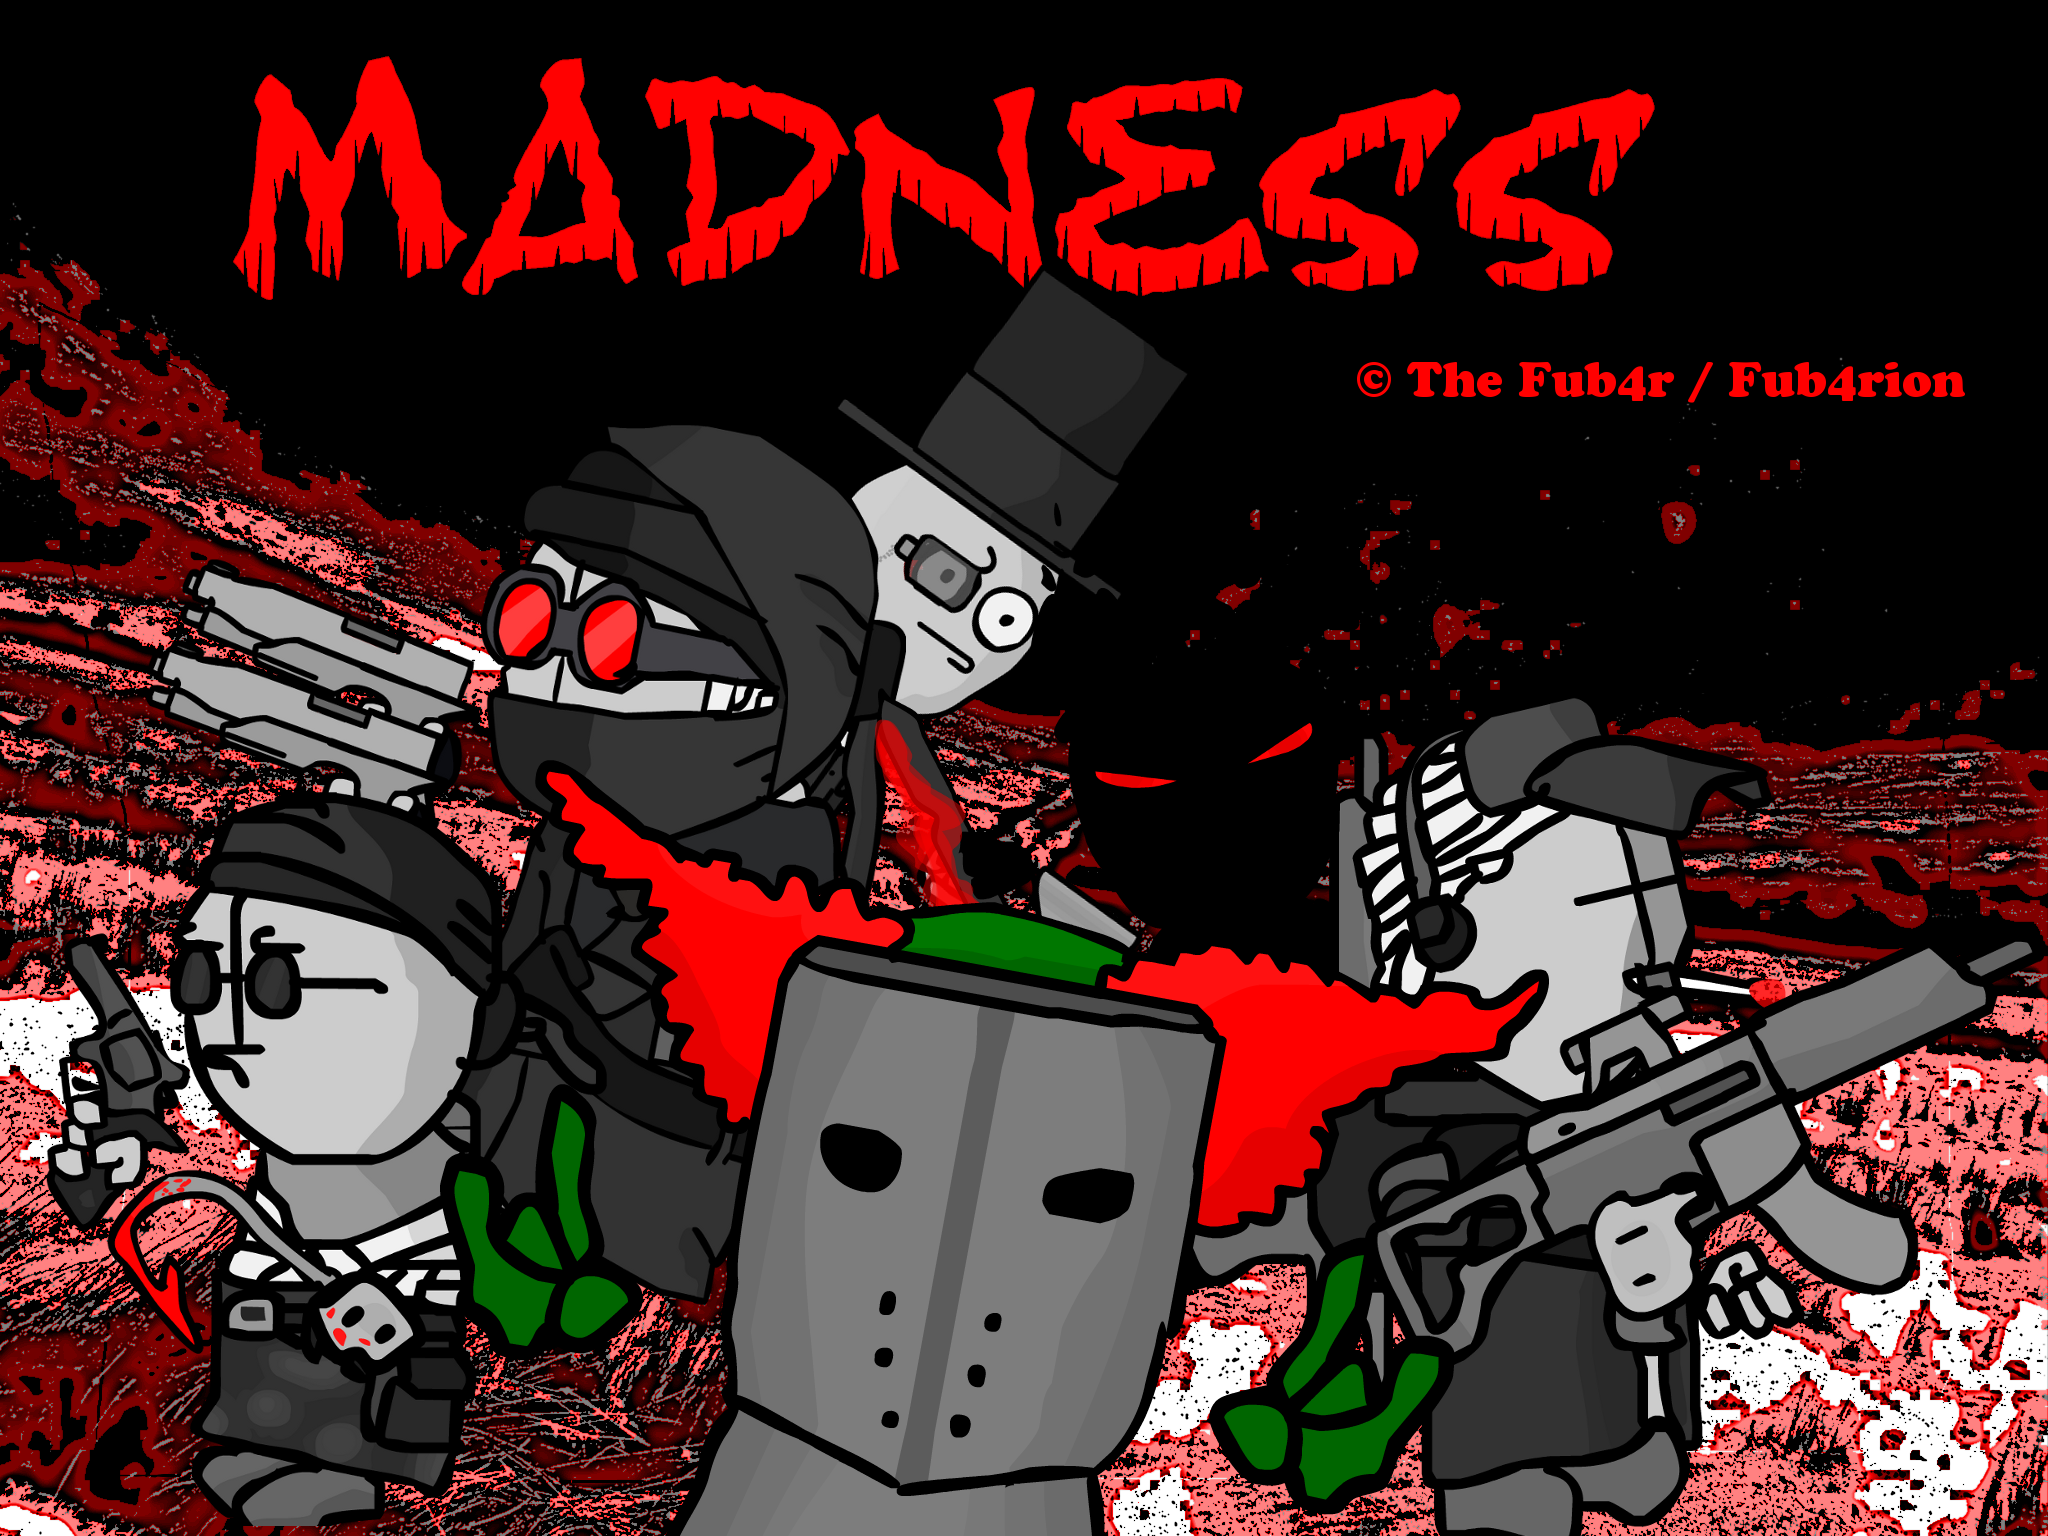 Madness Combat Screenshots, Madness Combat